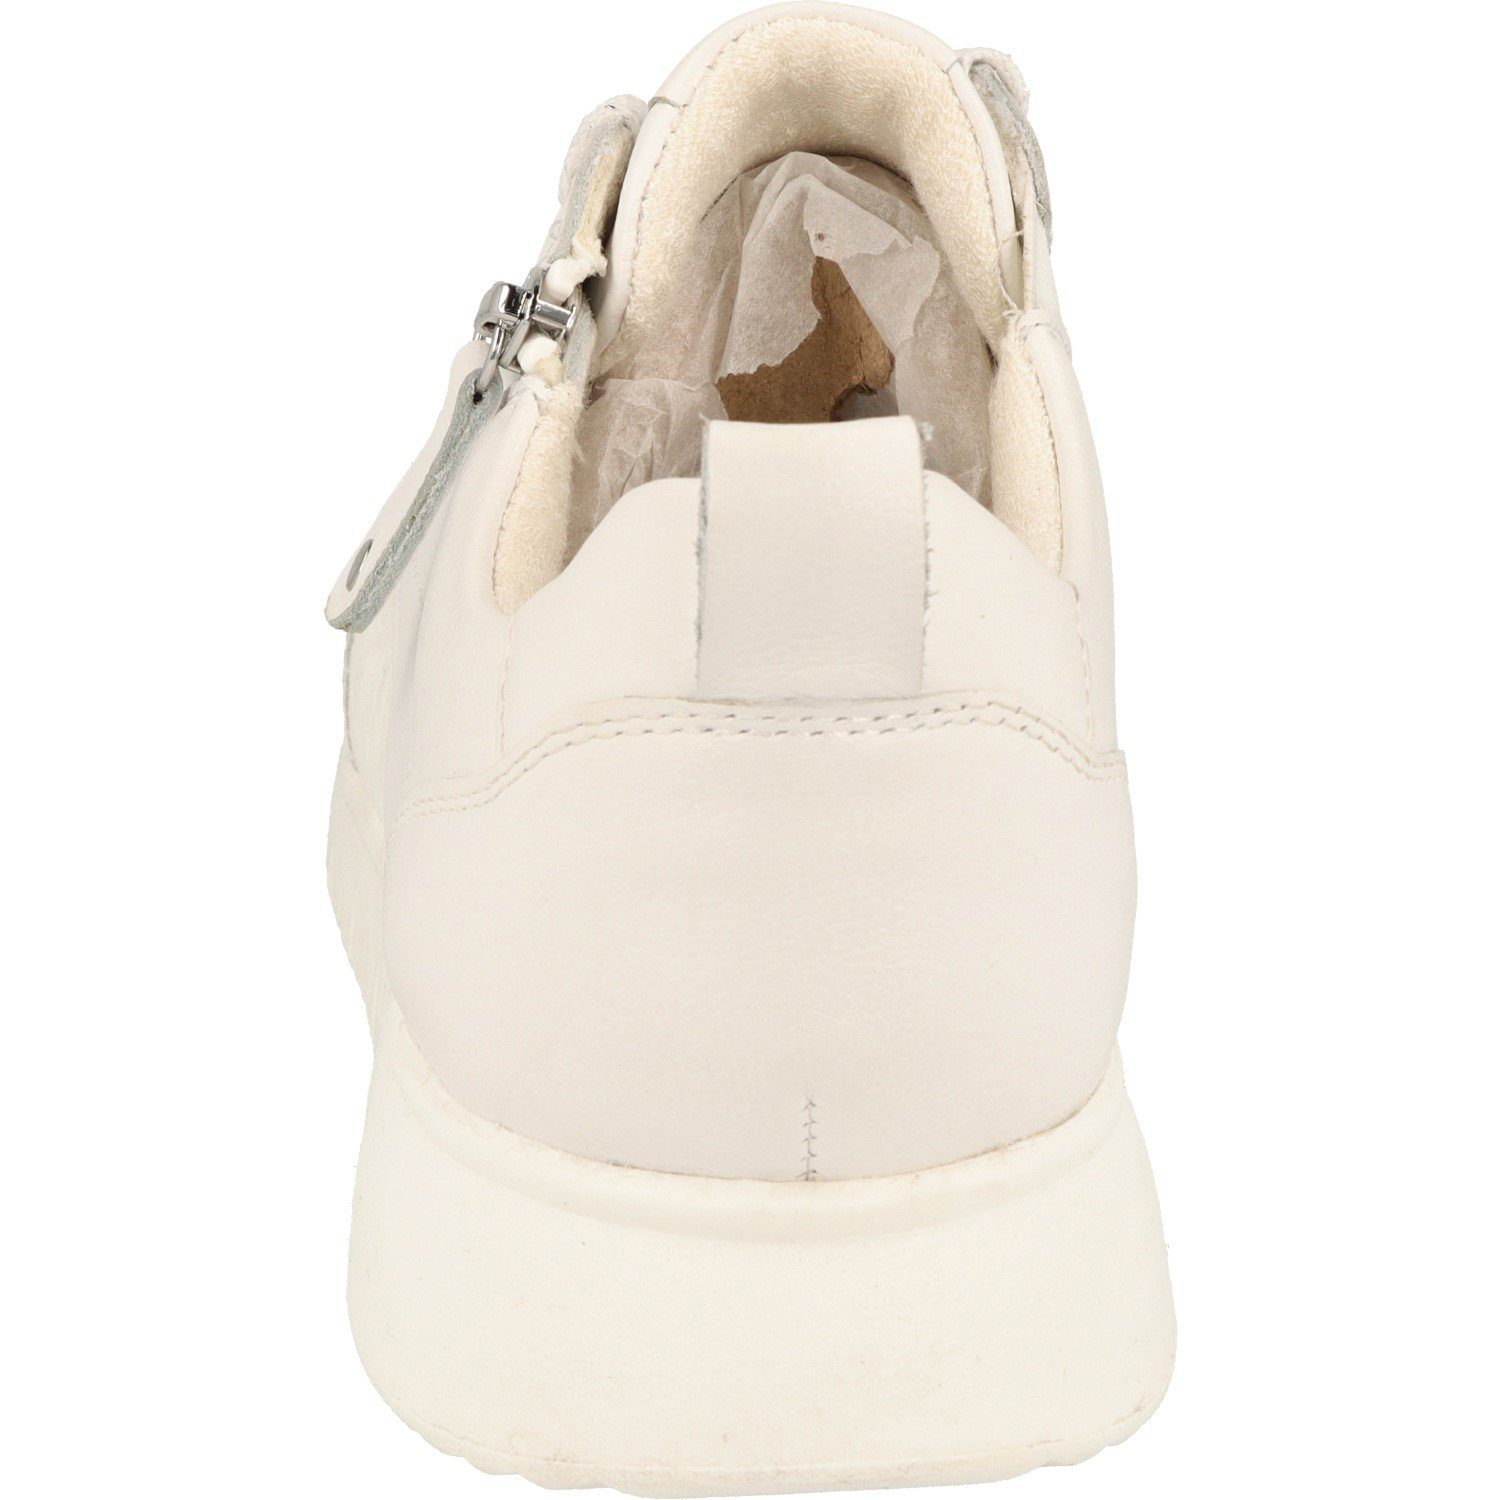 Tamaris COMFORT Damen Schuhe Leder 8-83705-20 Schnürschuh Halbschuhe White Sneaker